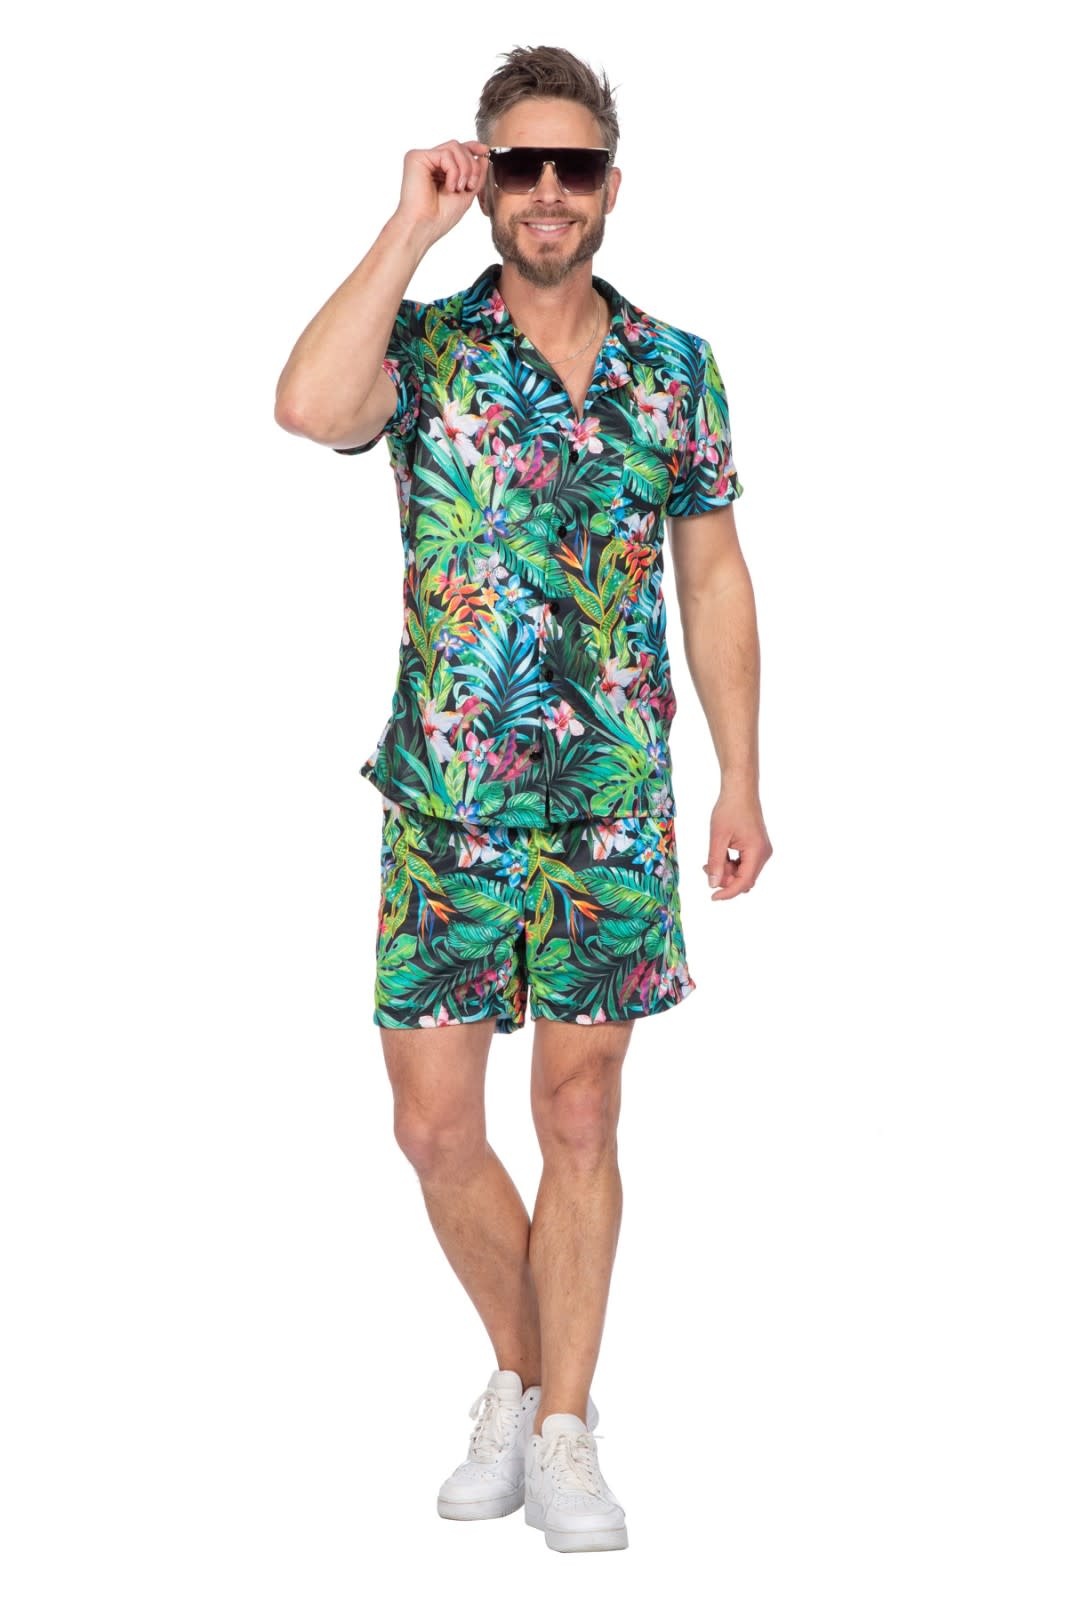 Vergelijkbaar band beton Festival outfit Hawaii hemd met short - Vekemans Feestwinkel